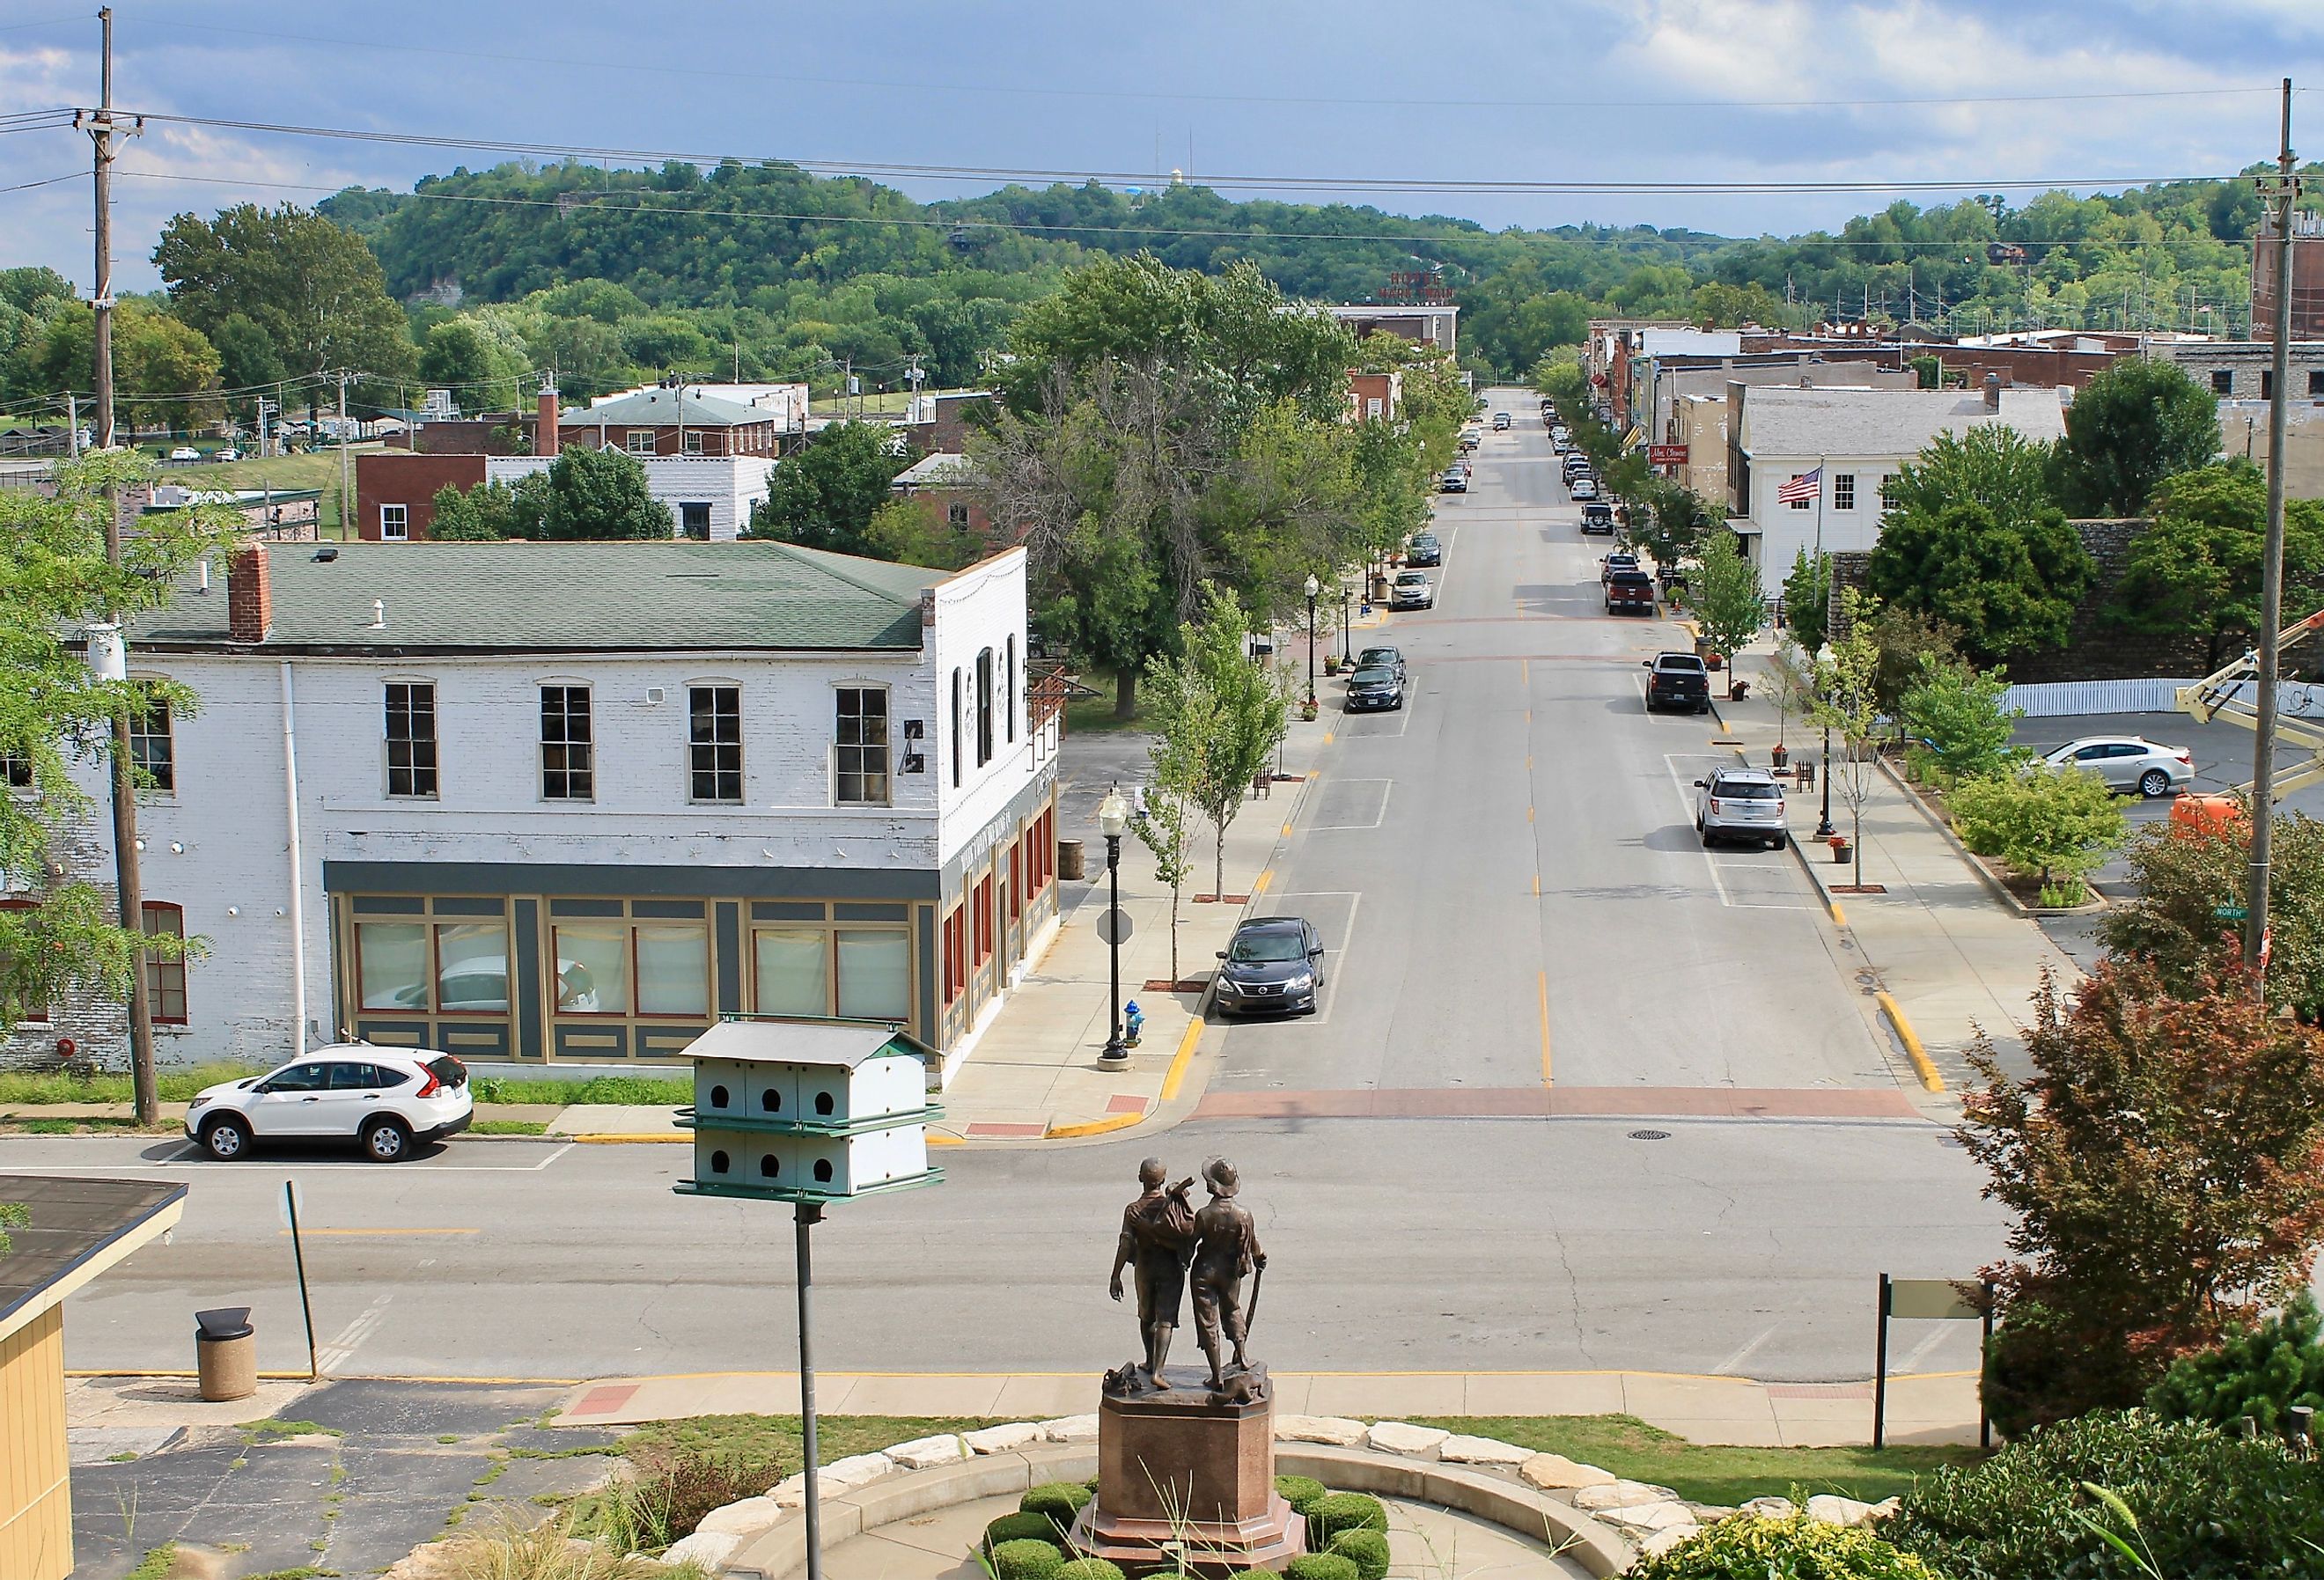 Overlooking the town of Hannibal, Missouri.